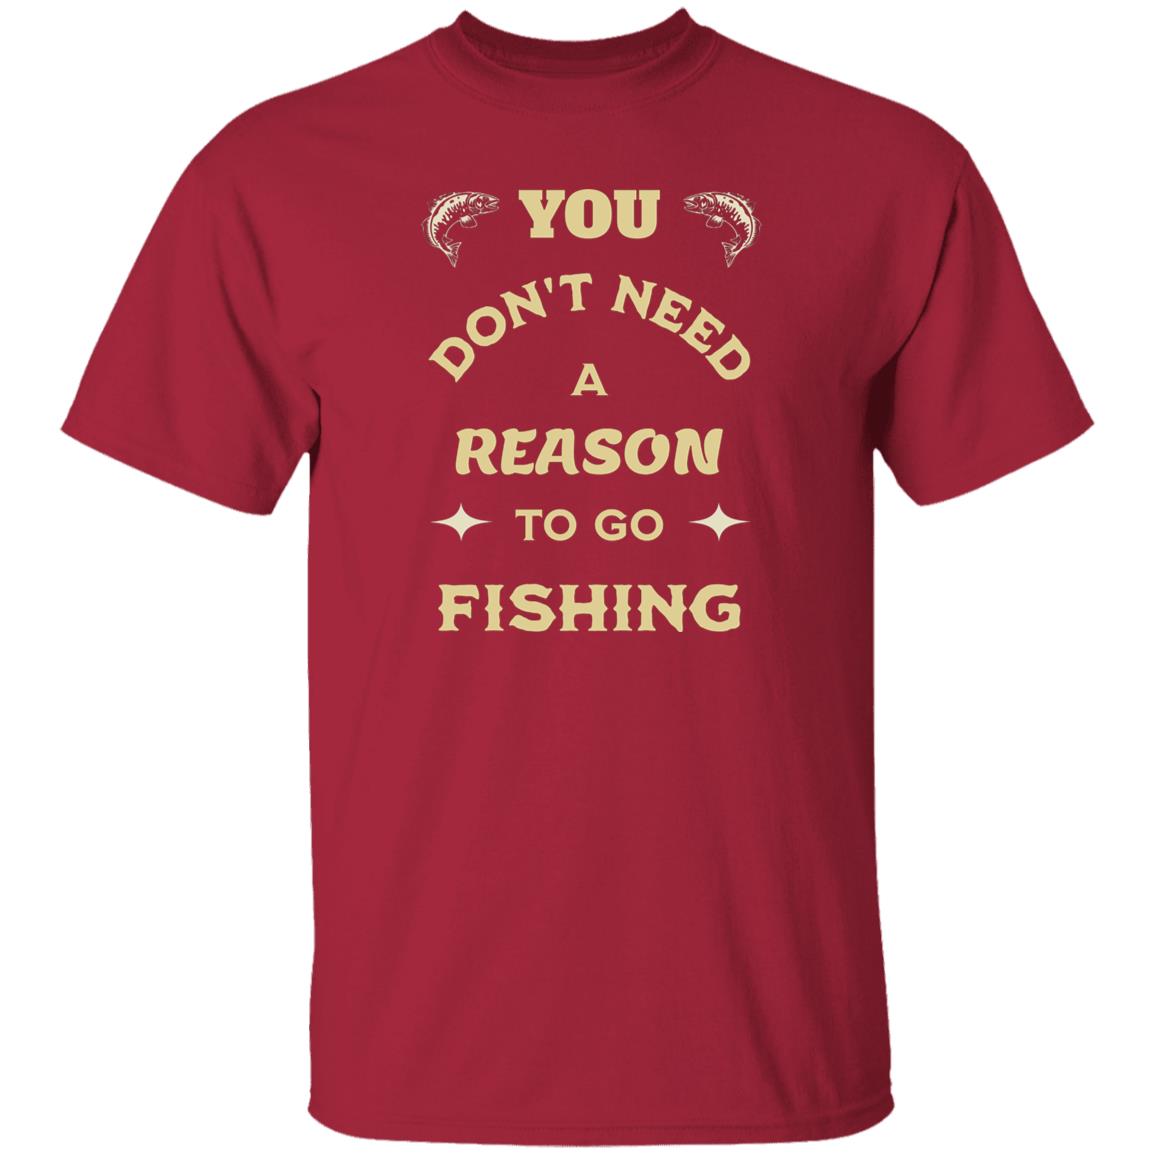 You don't need a reason to go fishing k t-shirt cardinal